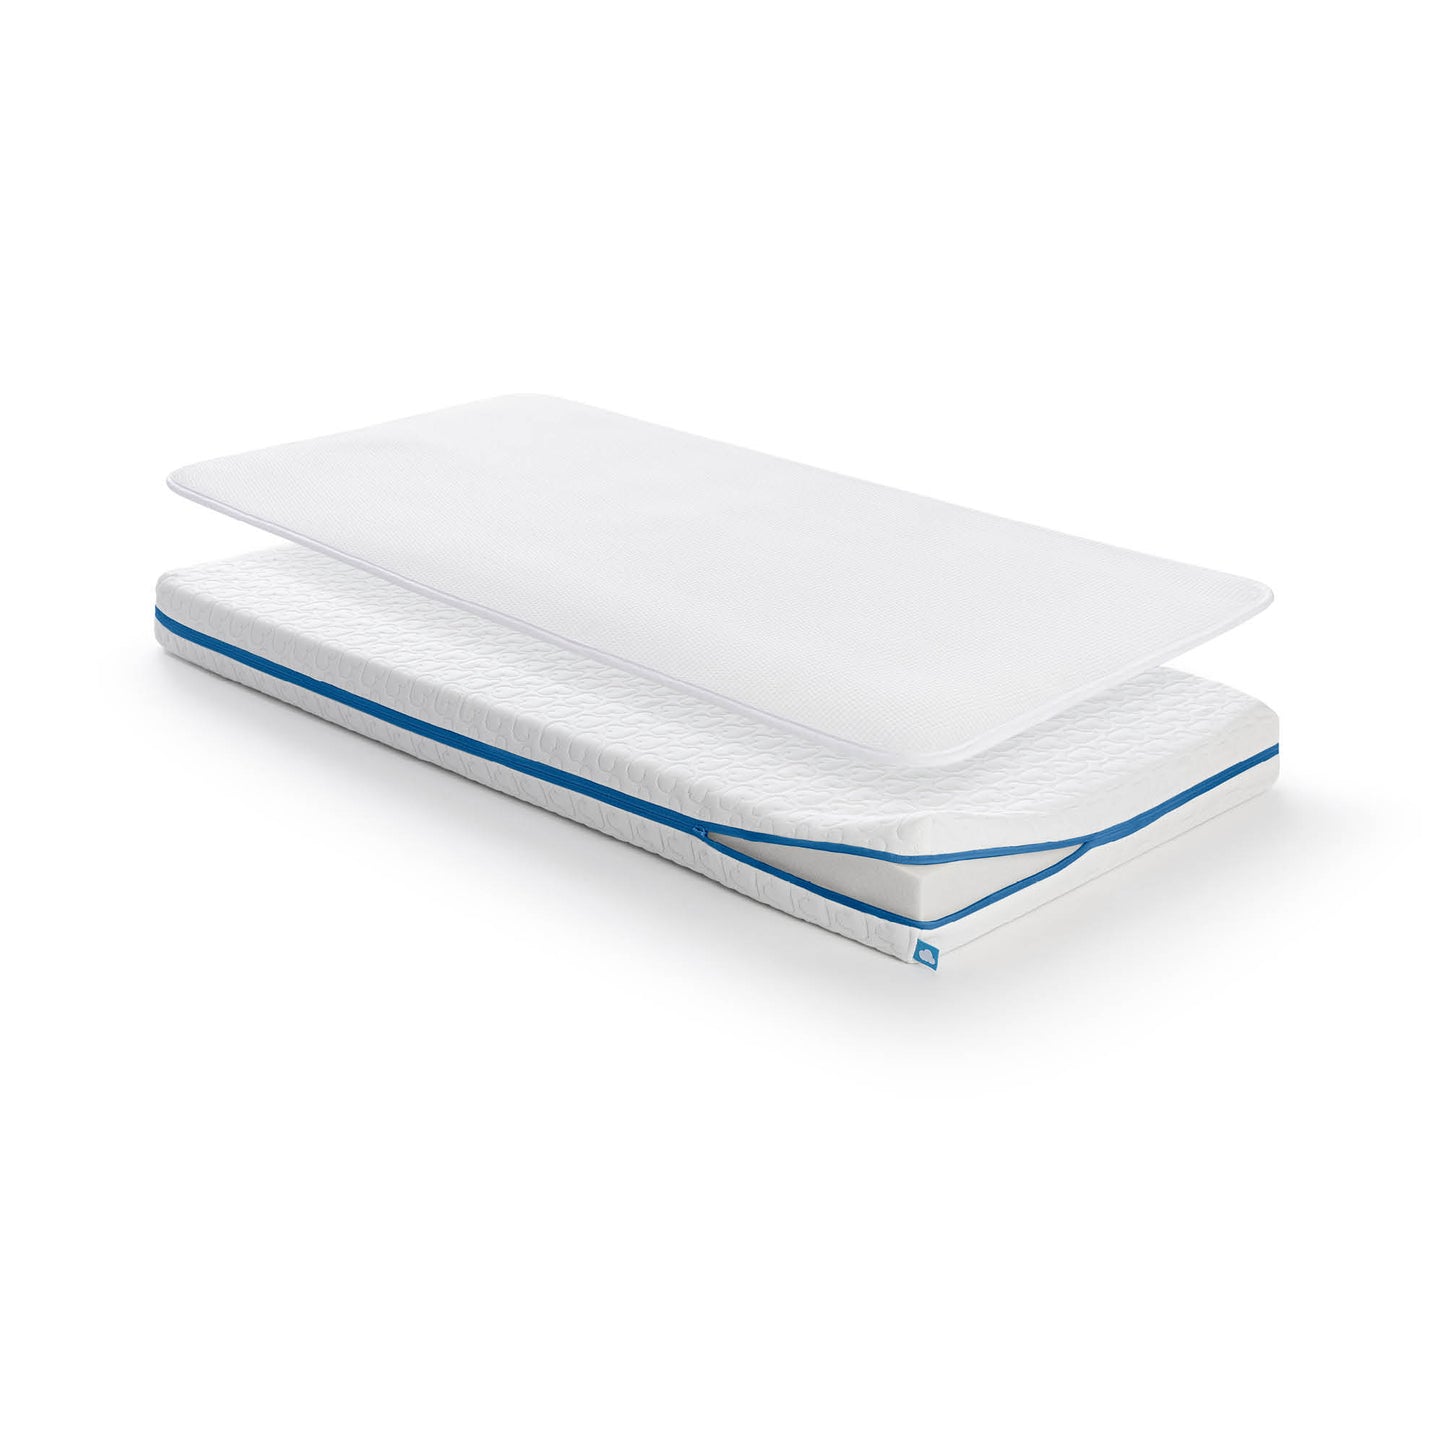 AeroSleep matras | Sleep Safe Pack Evolution 60x120cm